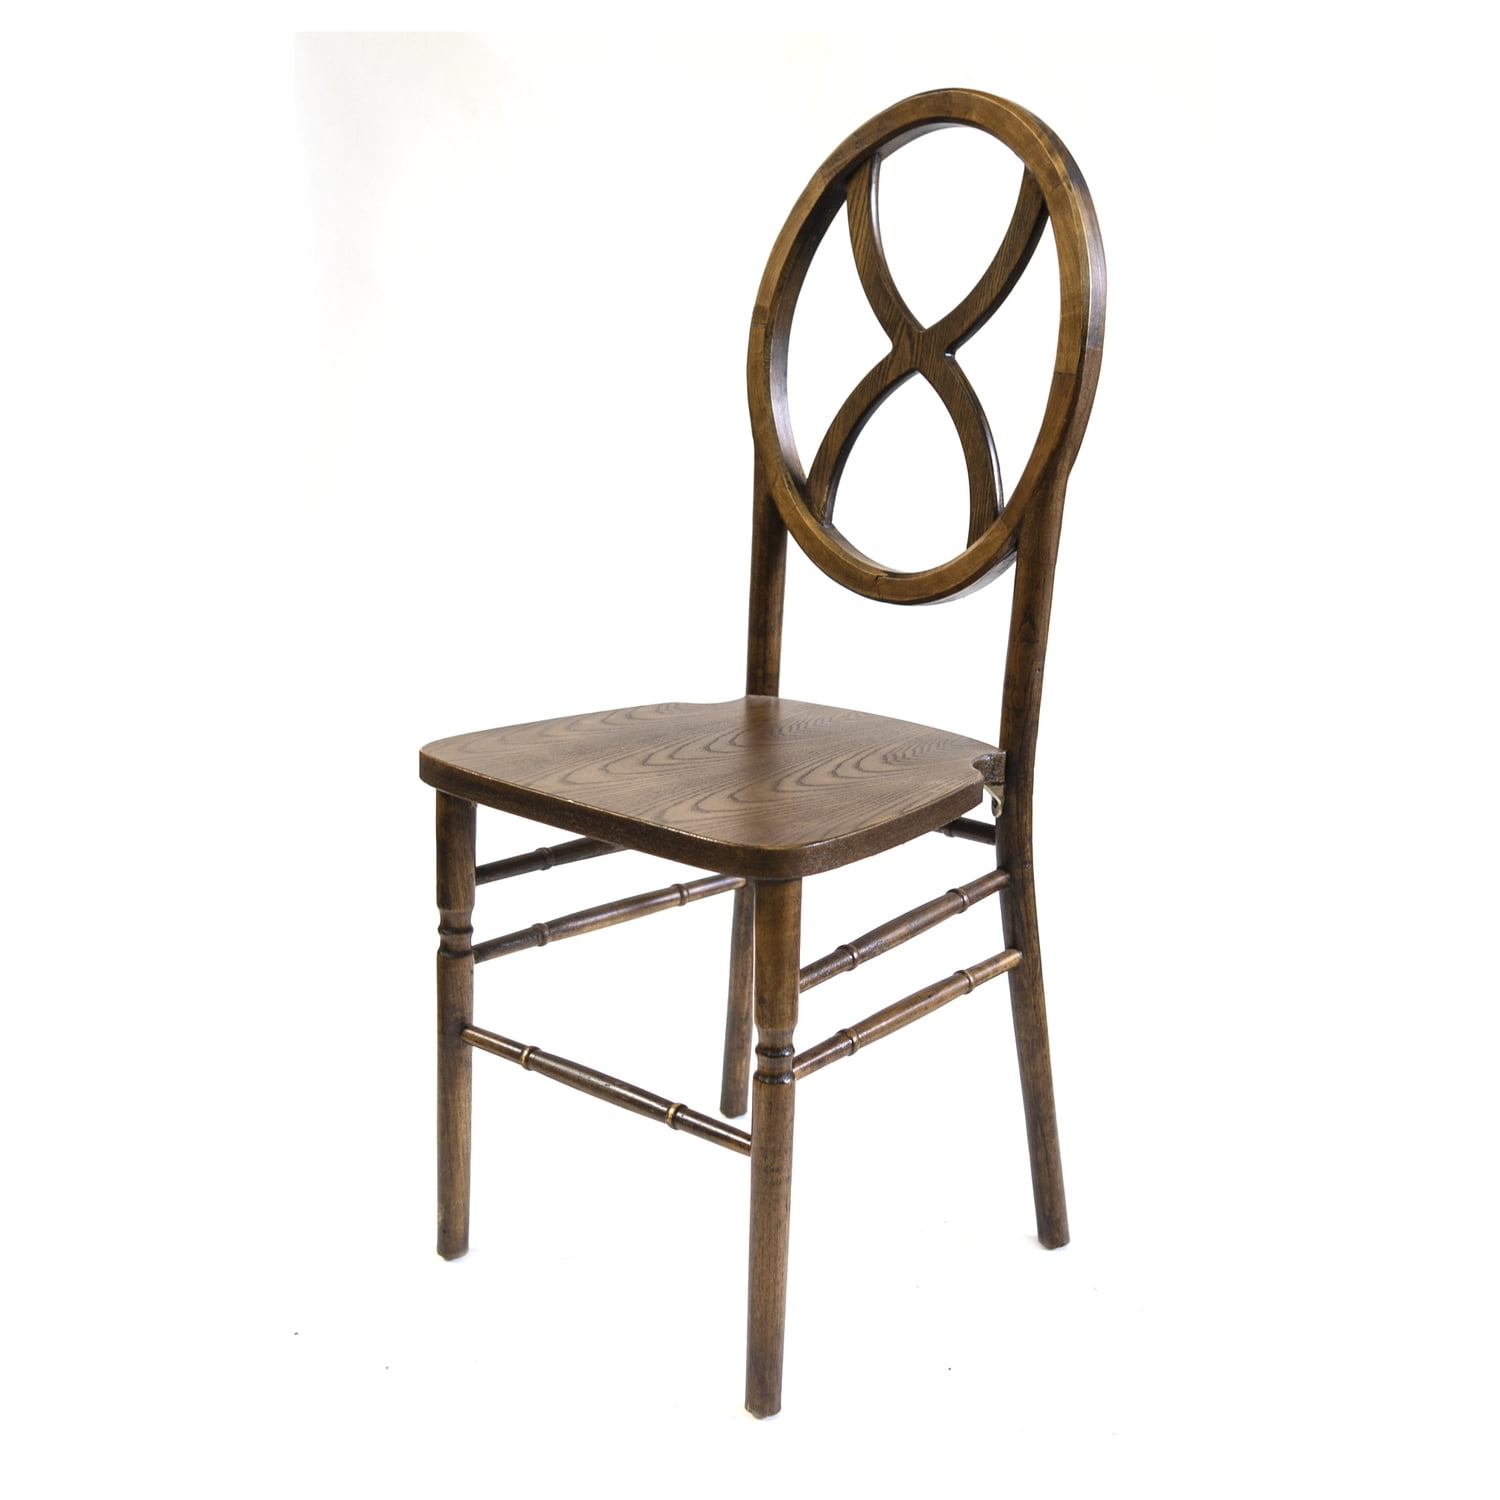 W-411-vr-sandglass-rddw Veronique Series Stackable Sand Glass Wood Dining Chair - Dark Walnut